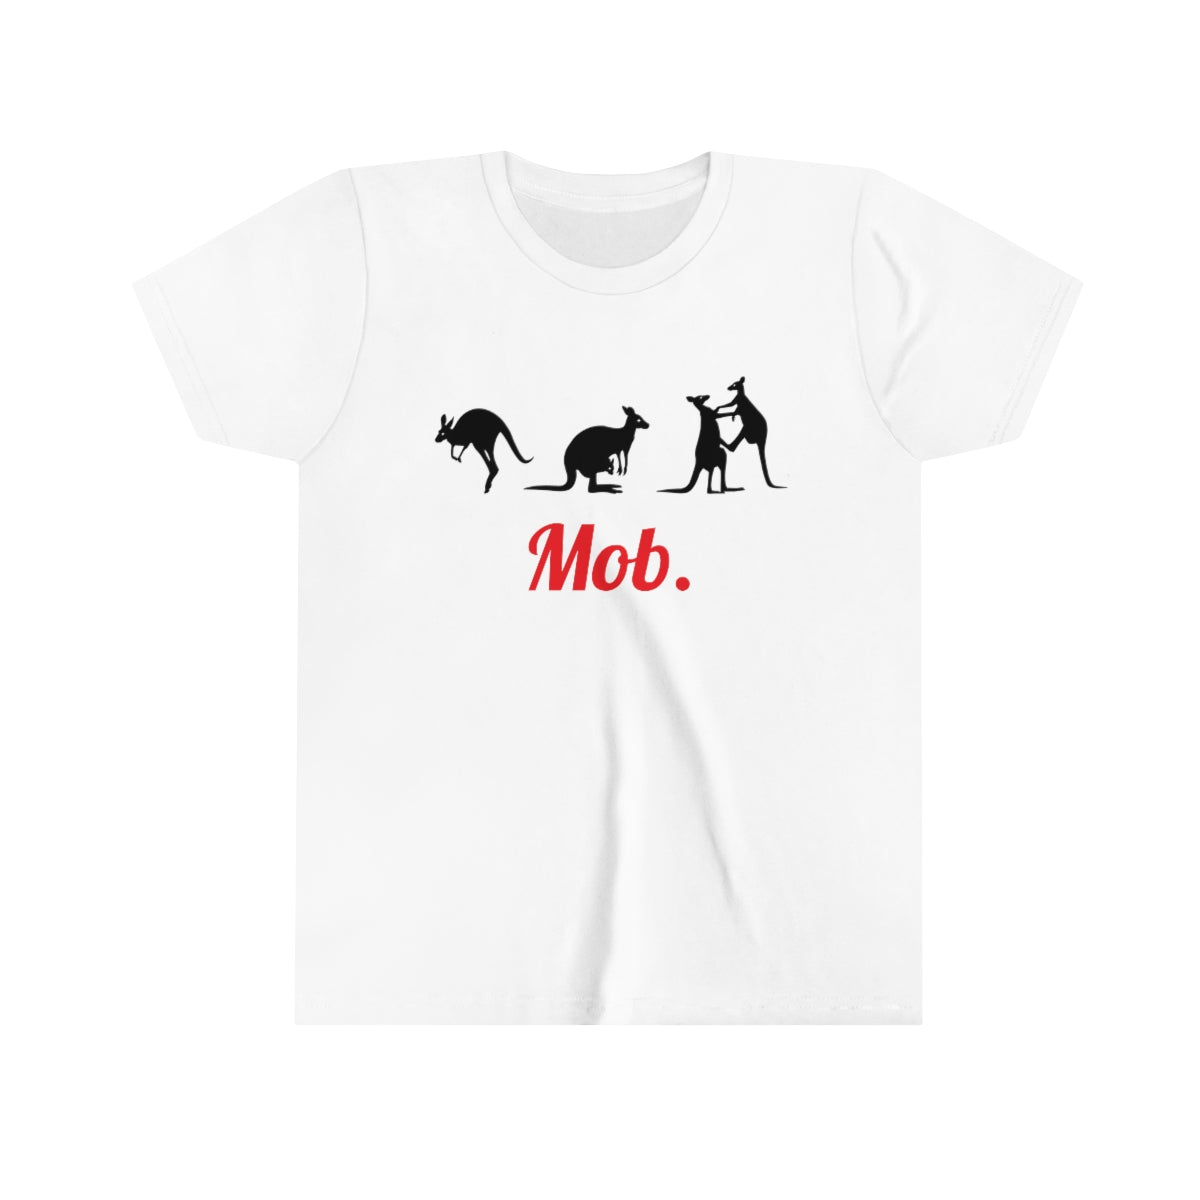 Kid's Mob of Kagaroos T-shirt